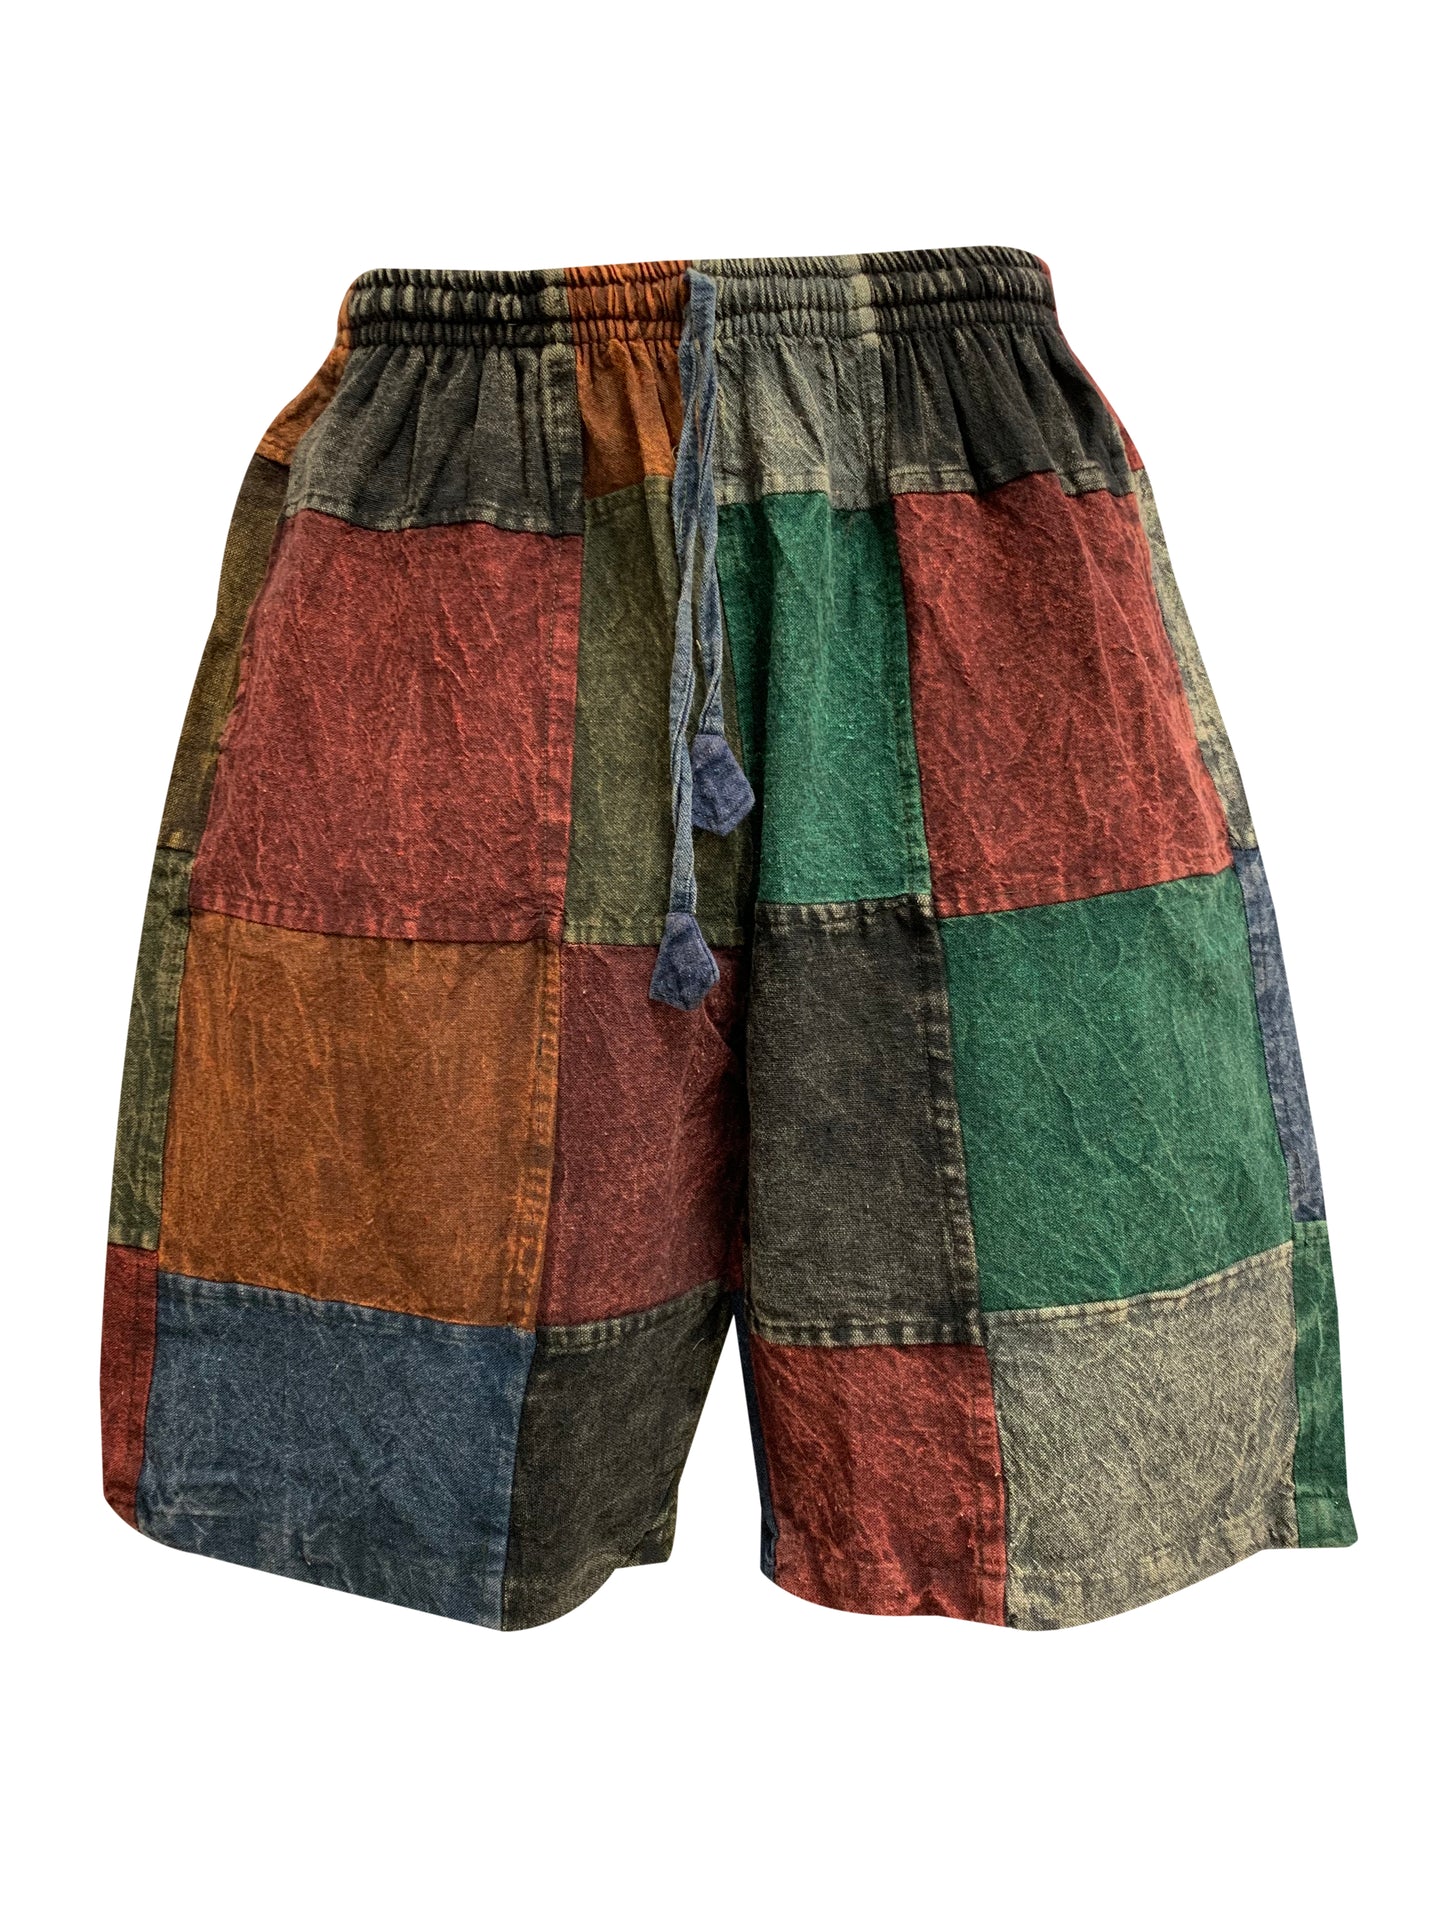 Men's Boho Bohemian Hippie Stonewashed Cotton Patchwork Colorblock Rustic Three Pocket Festival Shorts